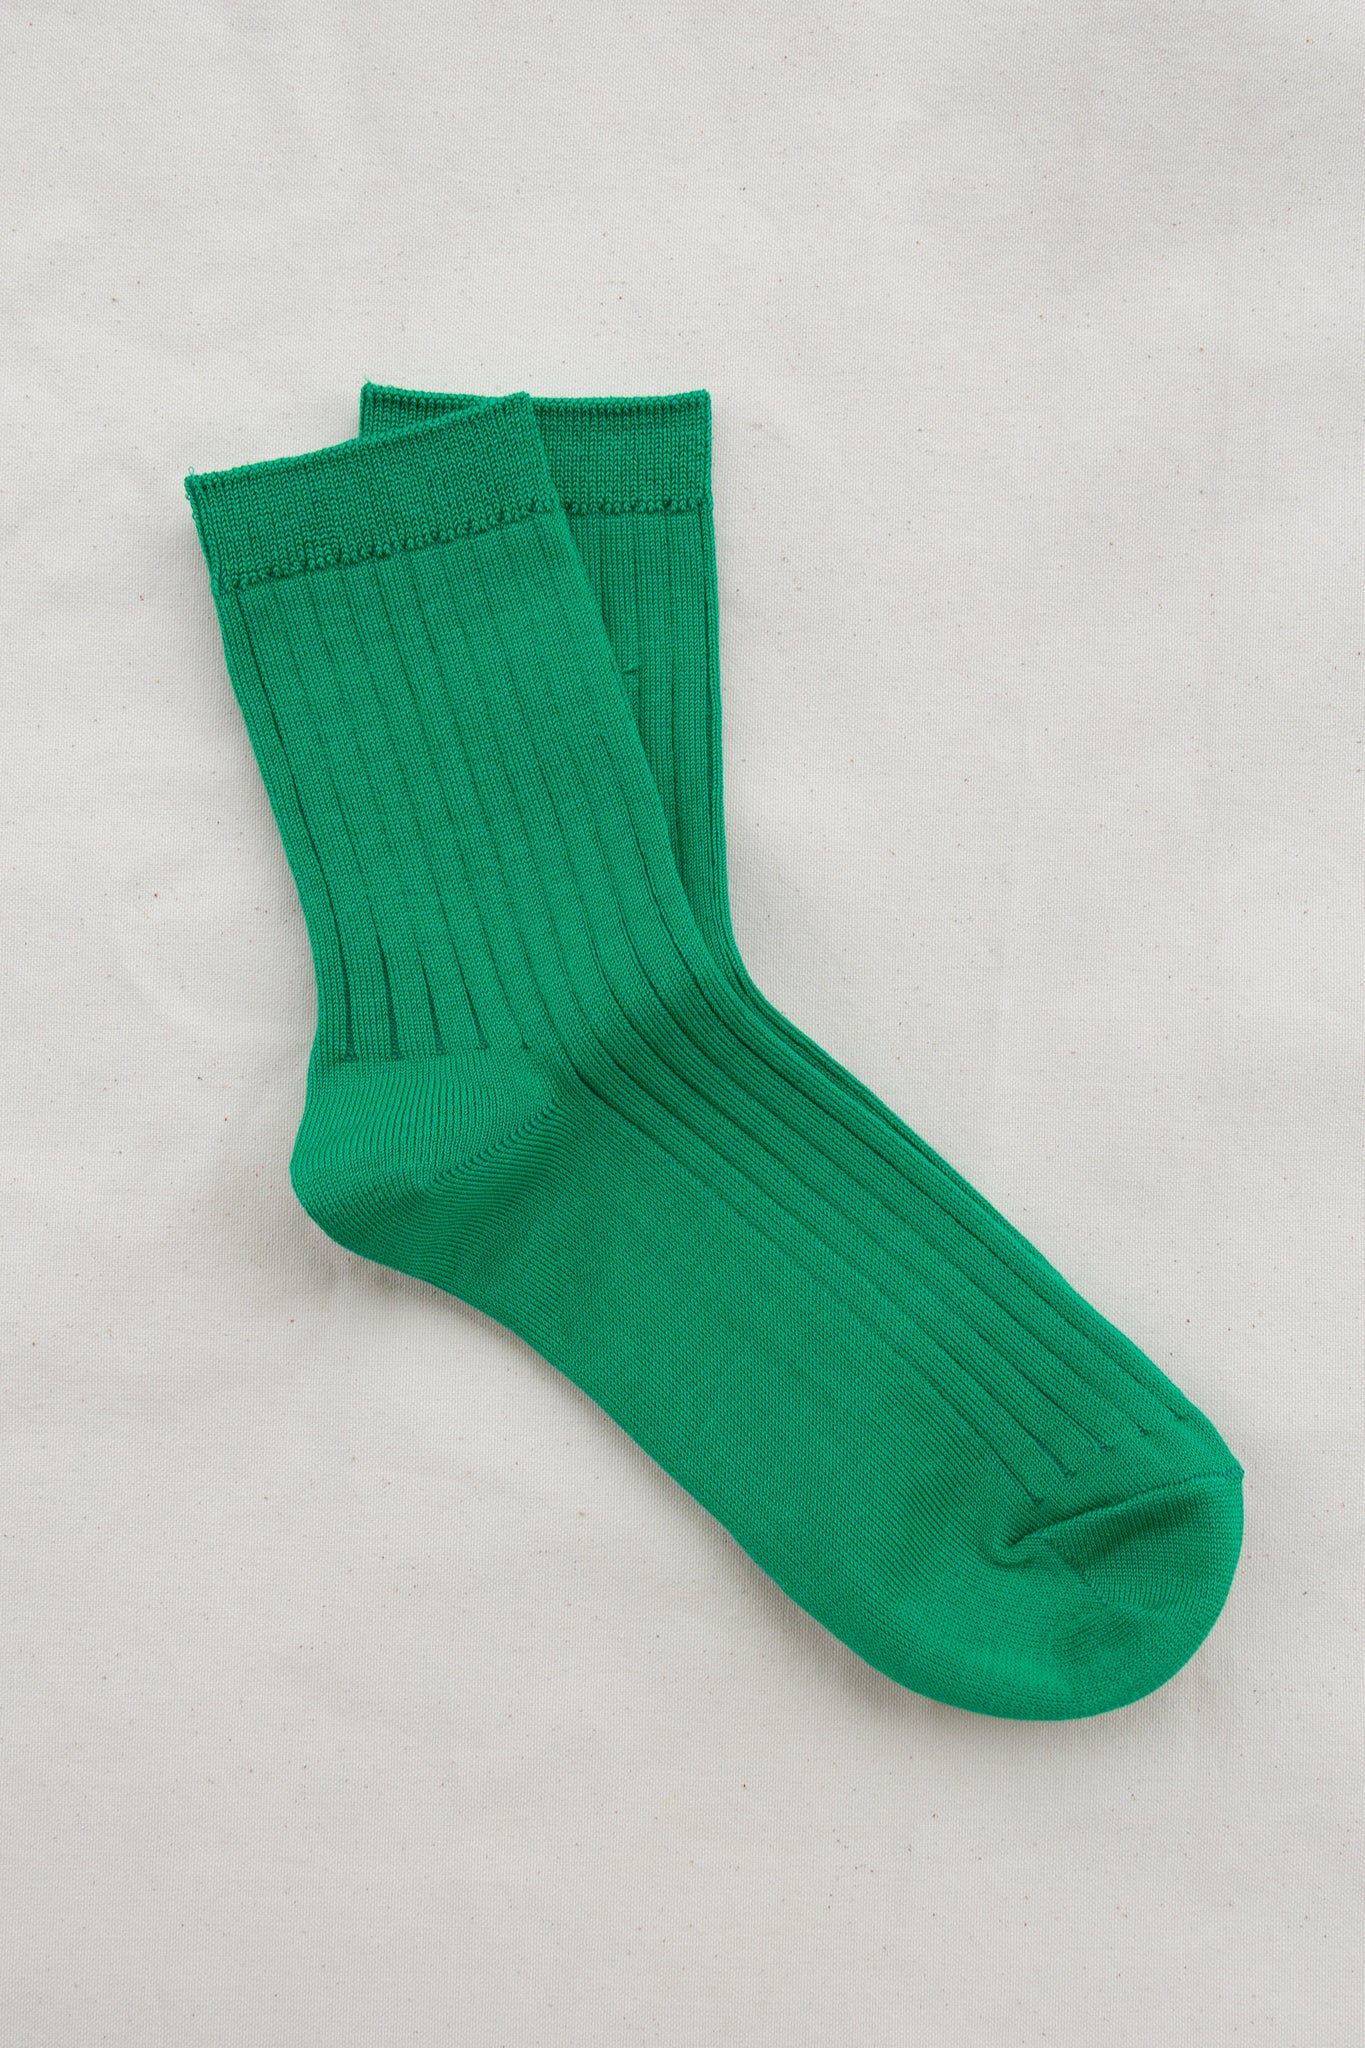 Her Socks / Kelly Green